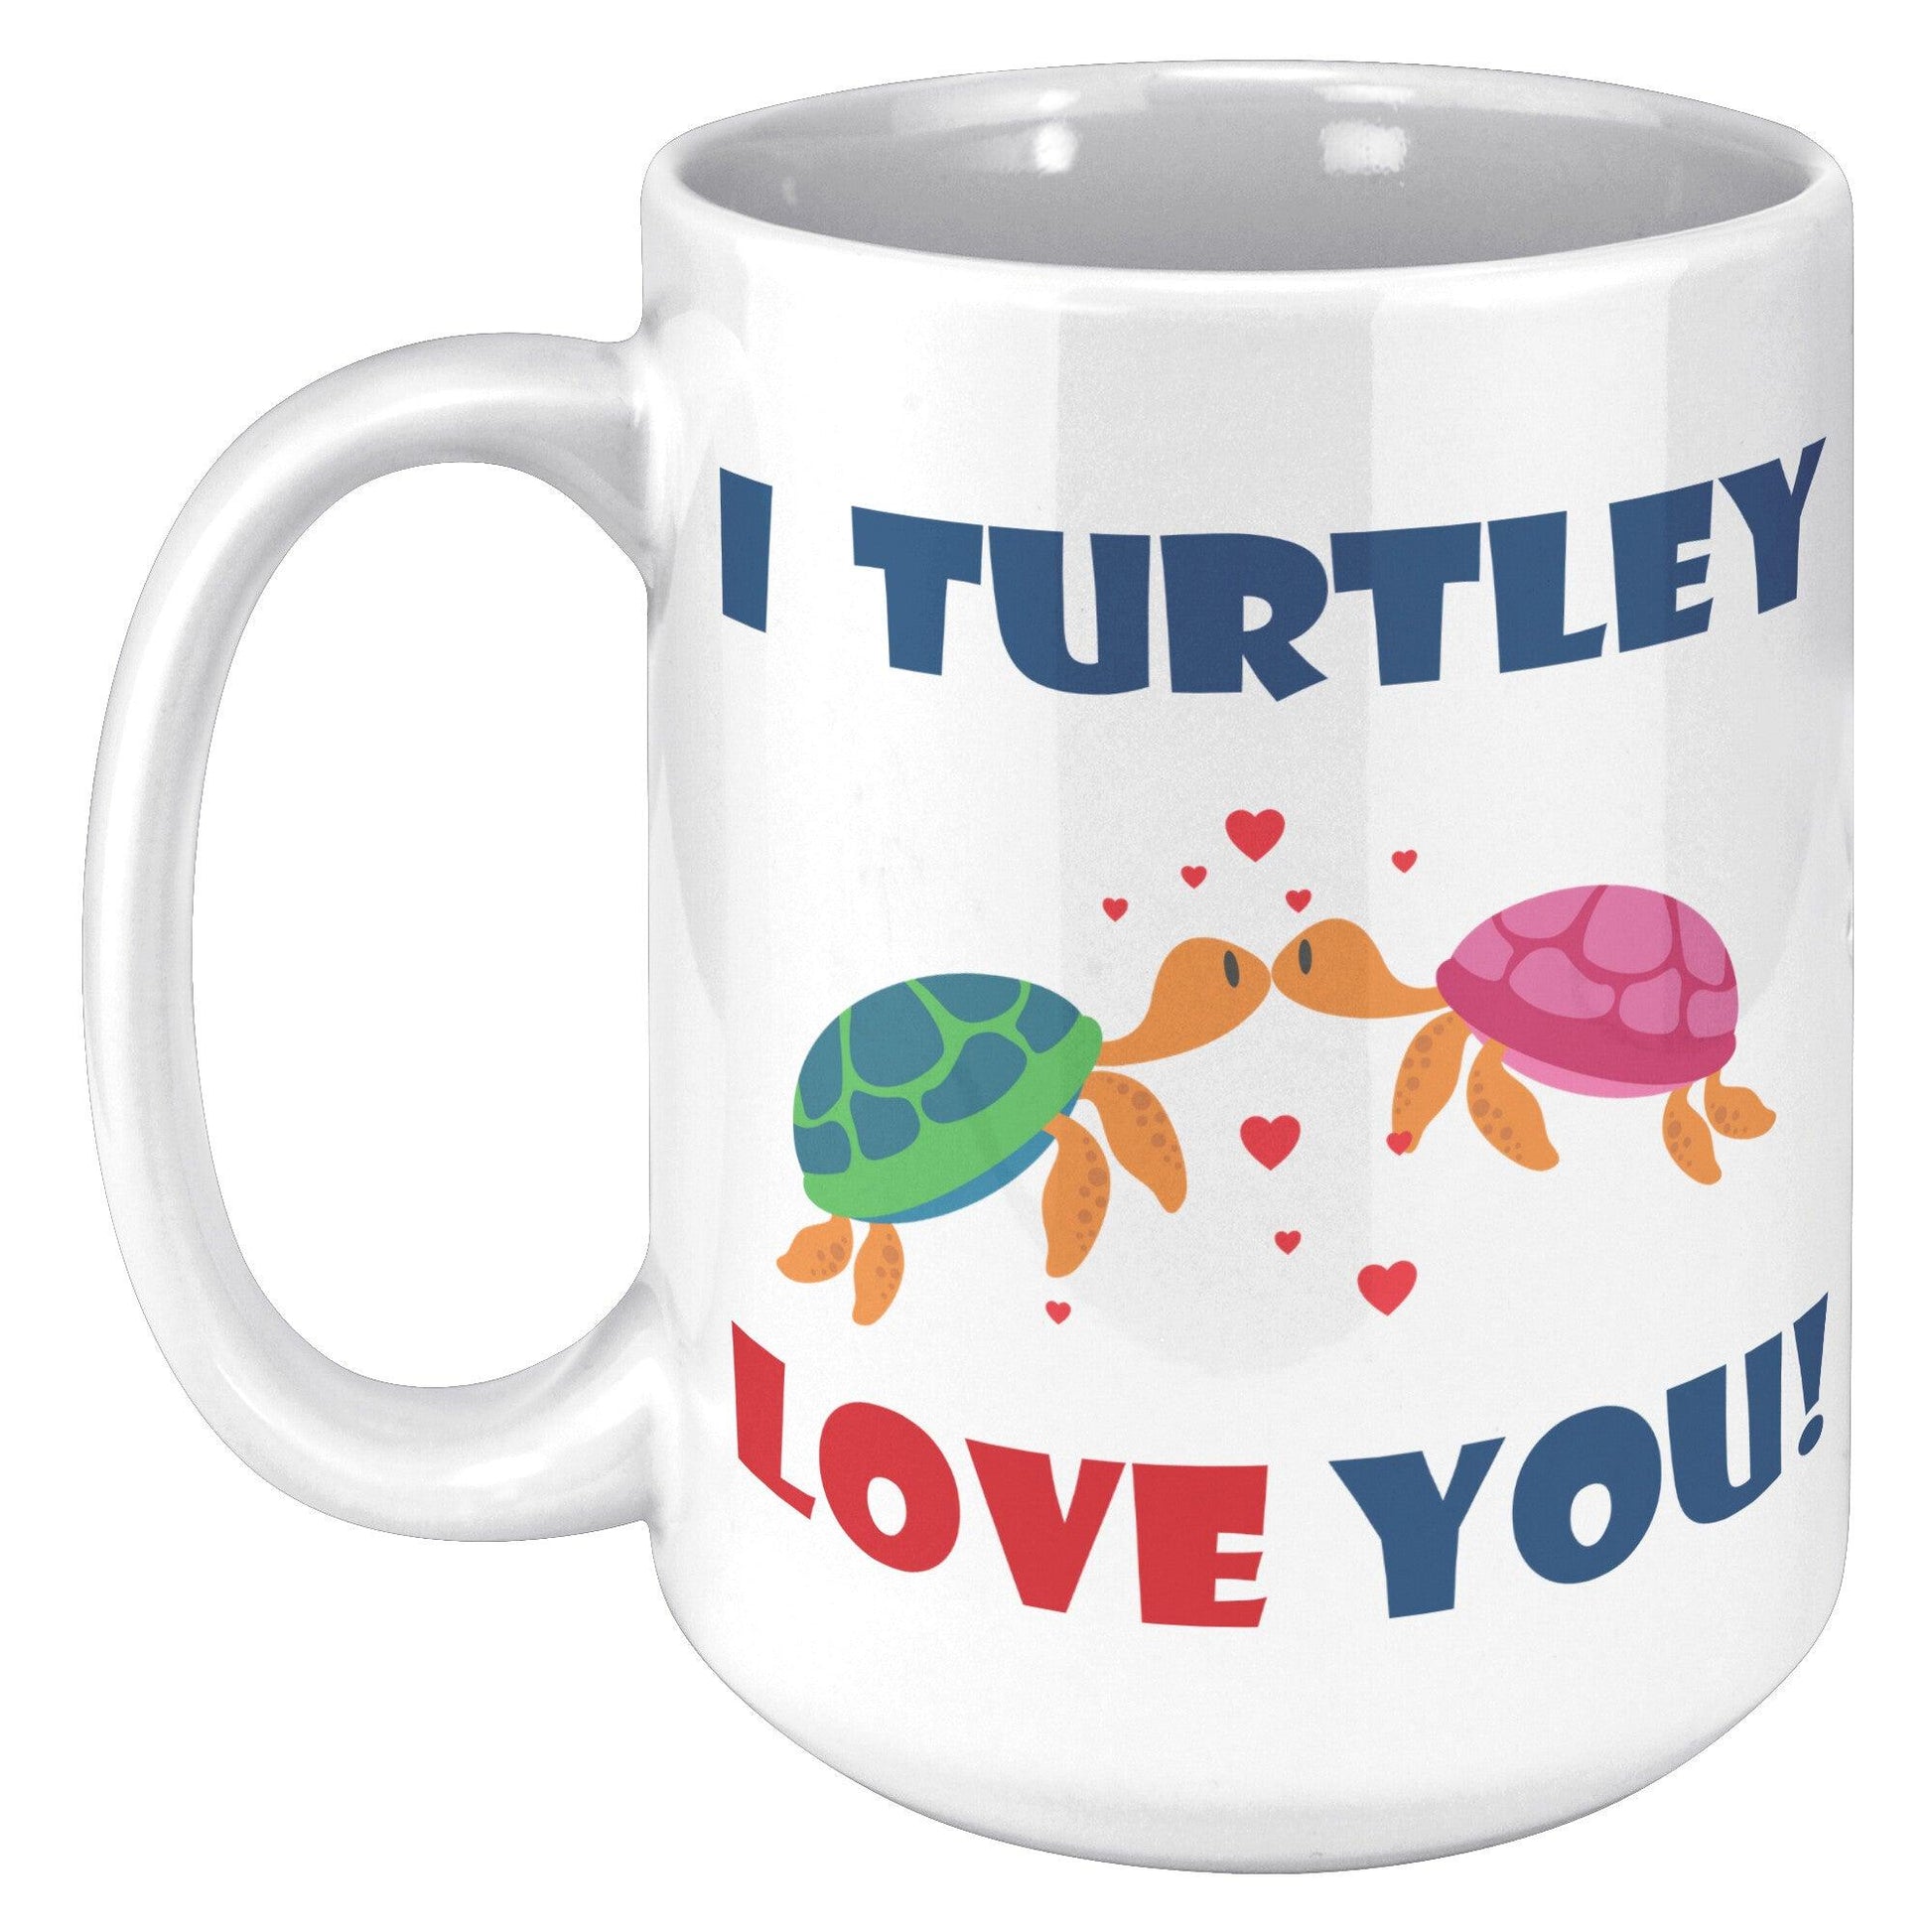 I Turtley Love You White Mug - TheGivenGet